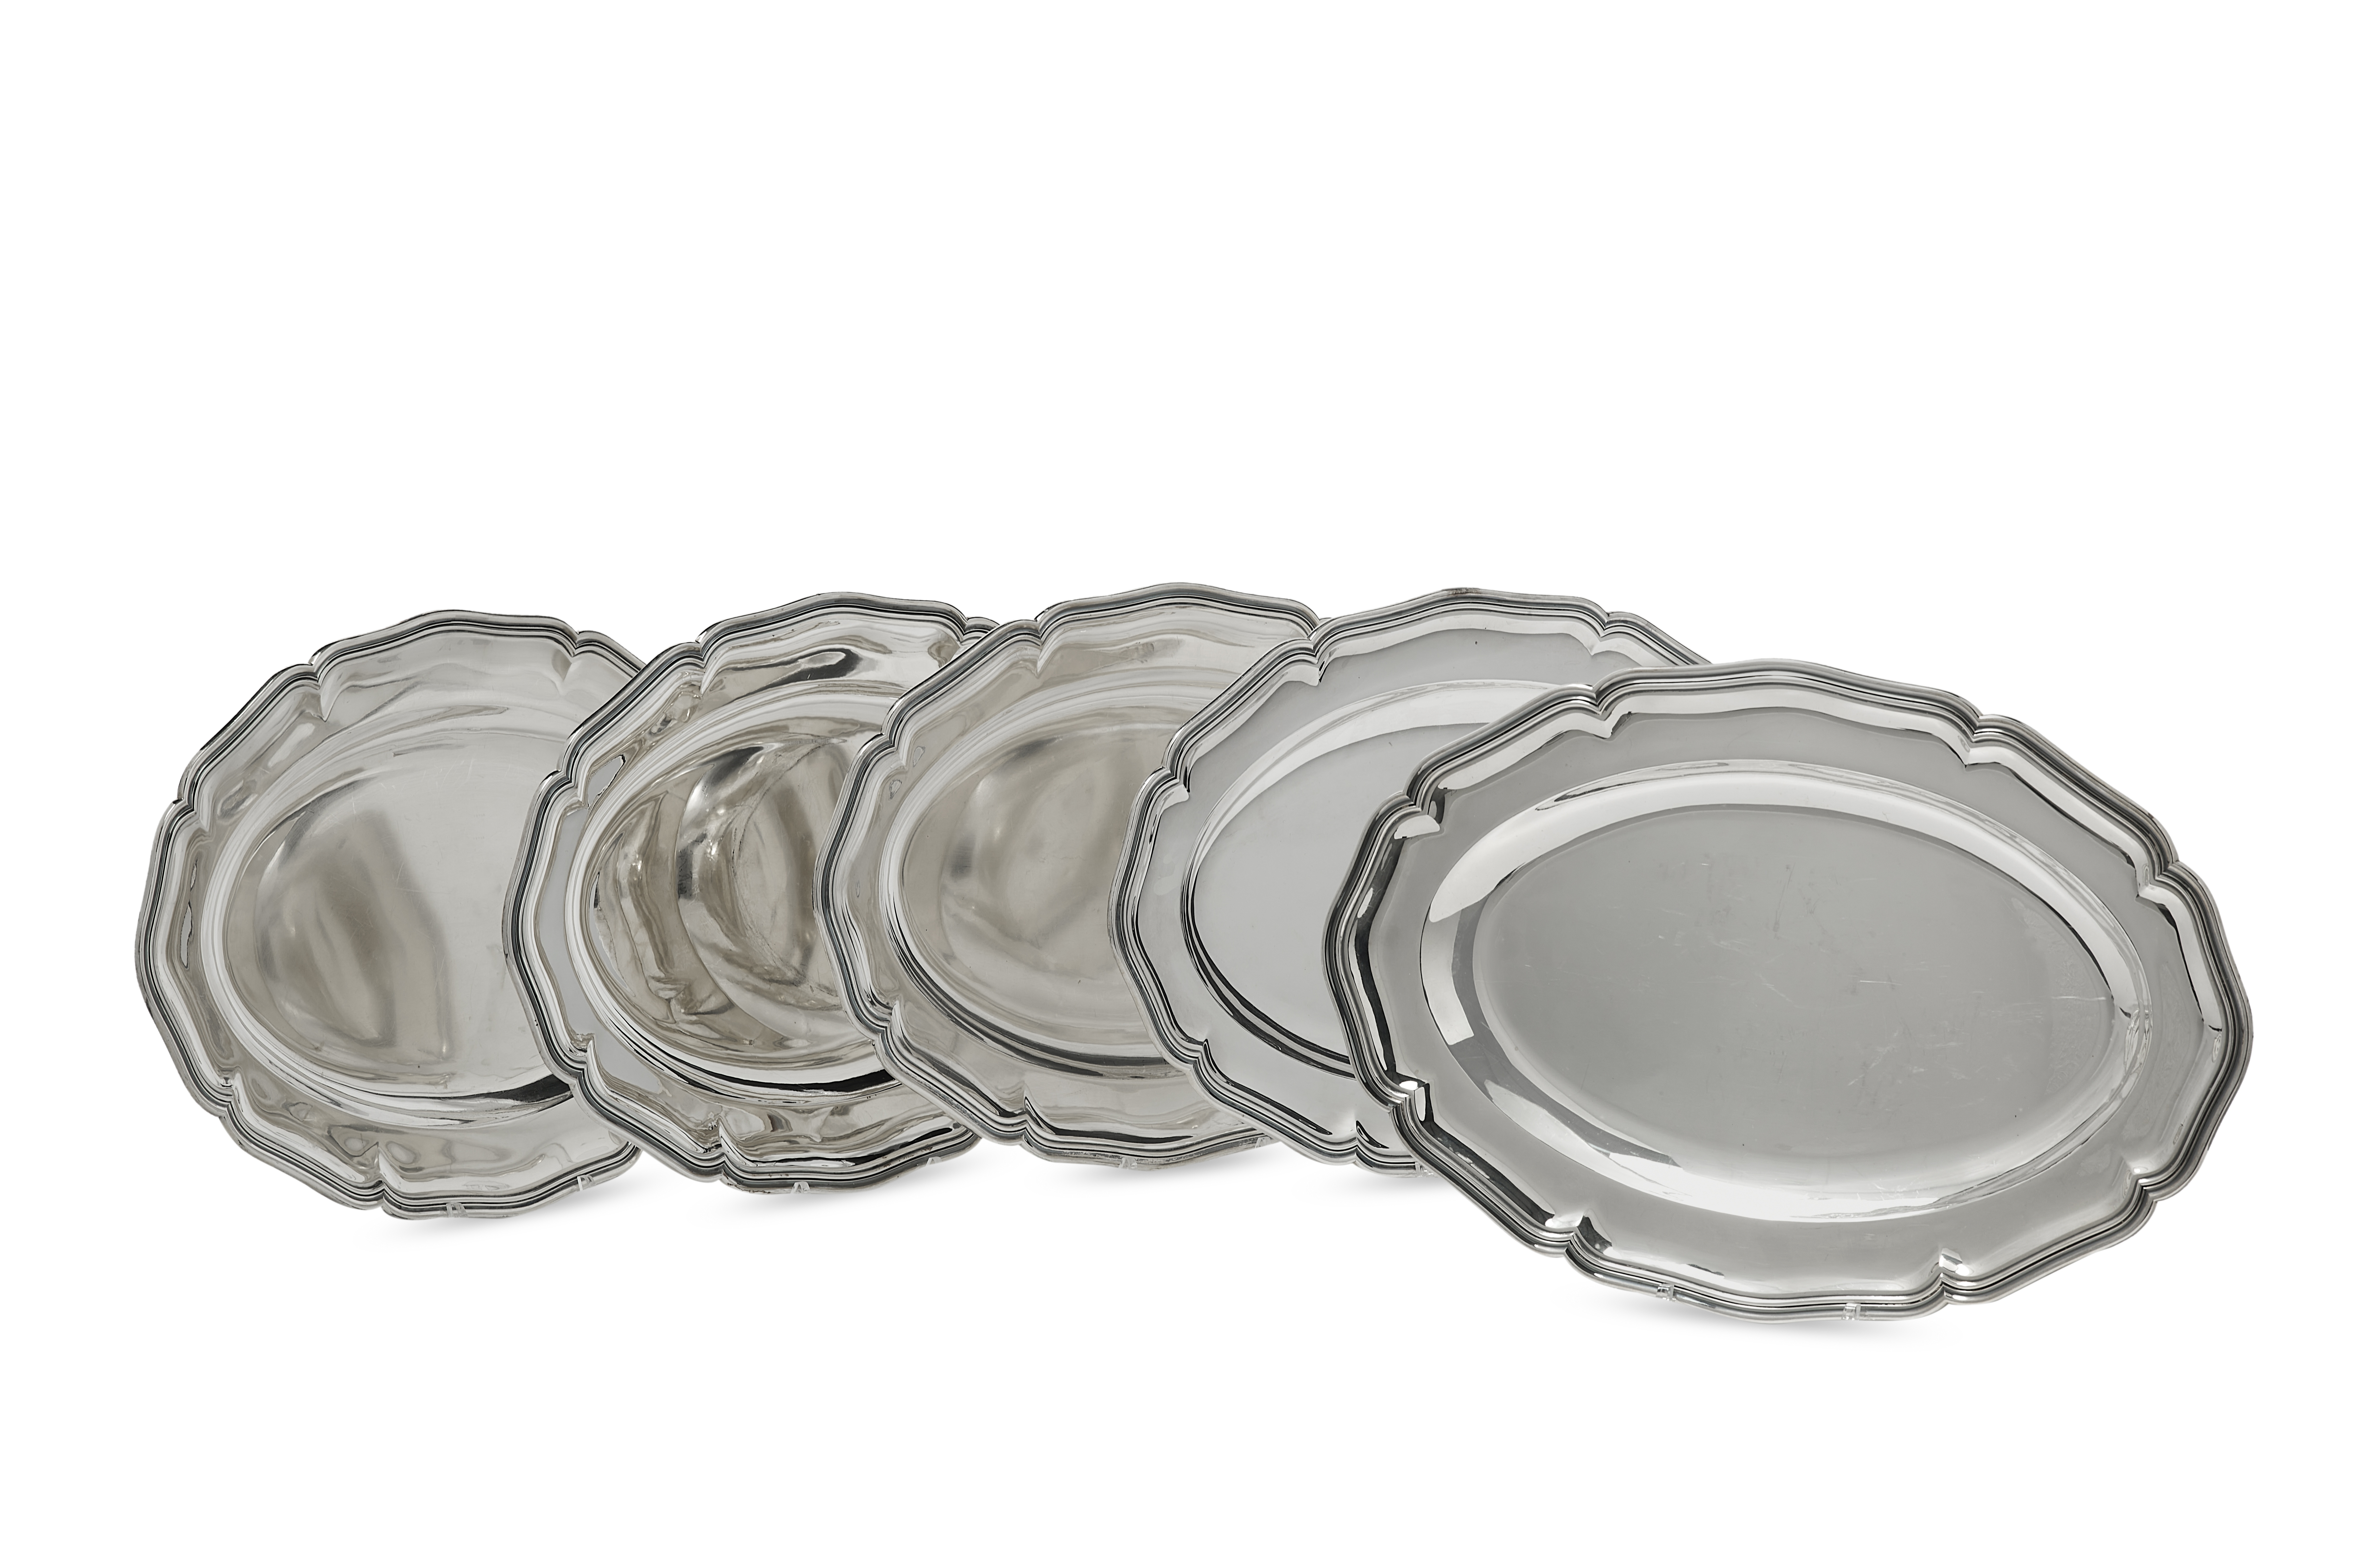 Five silver plates